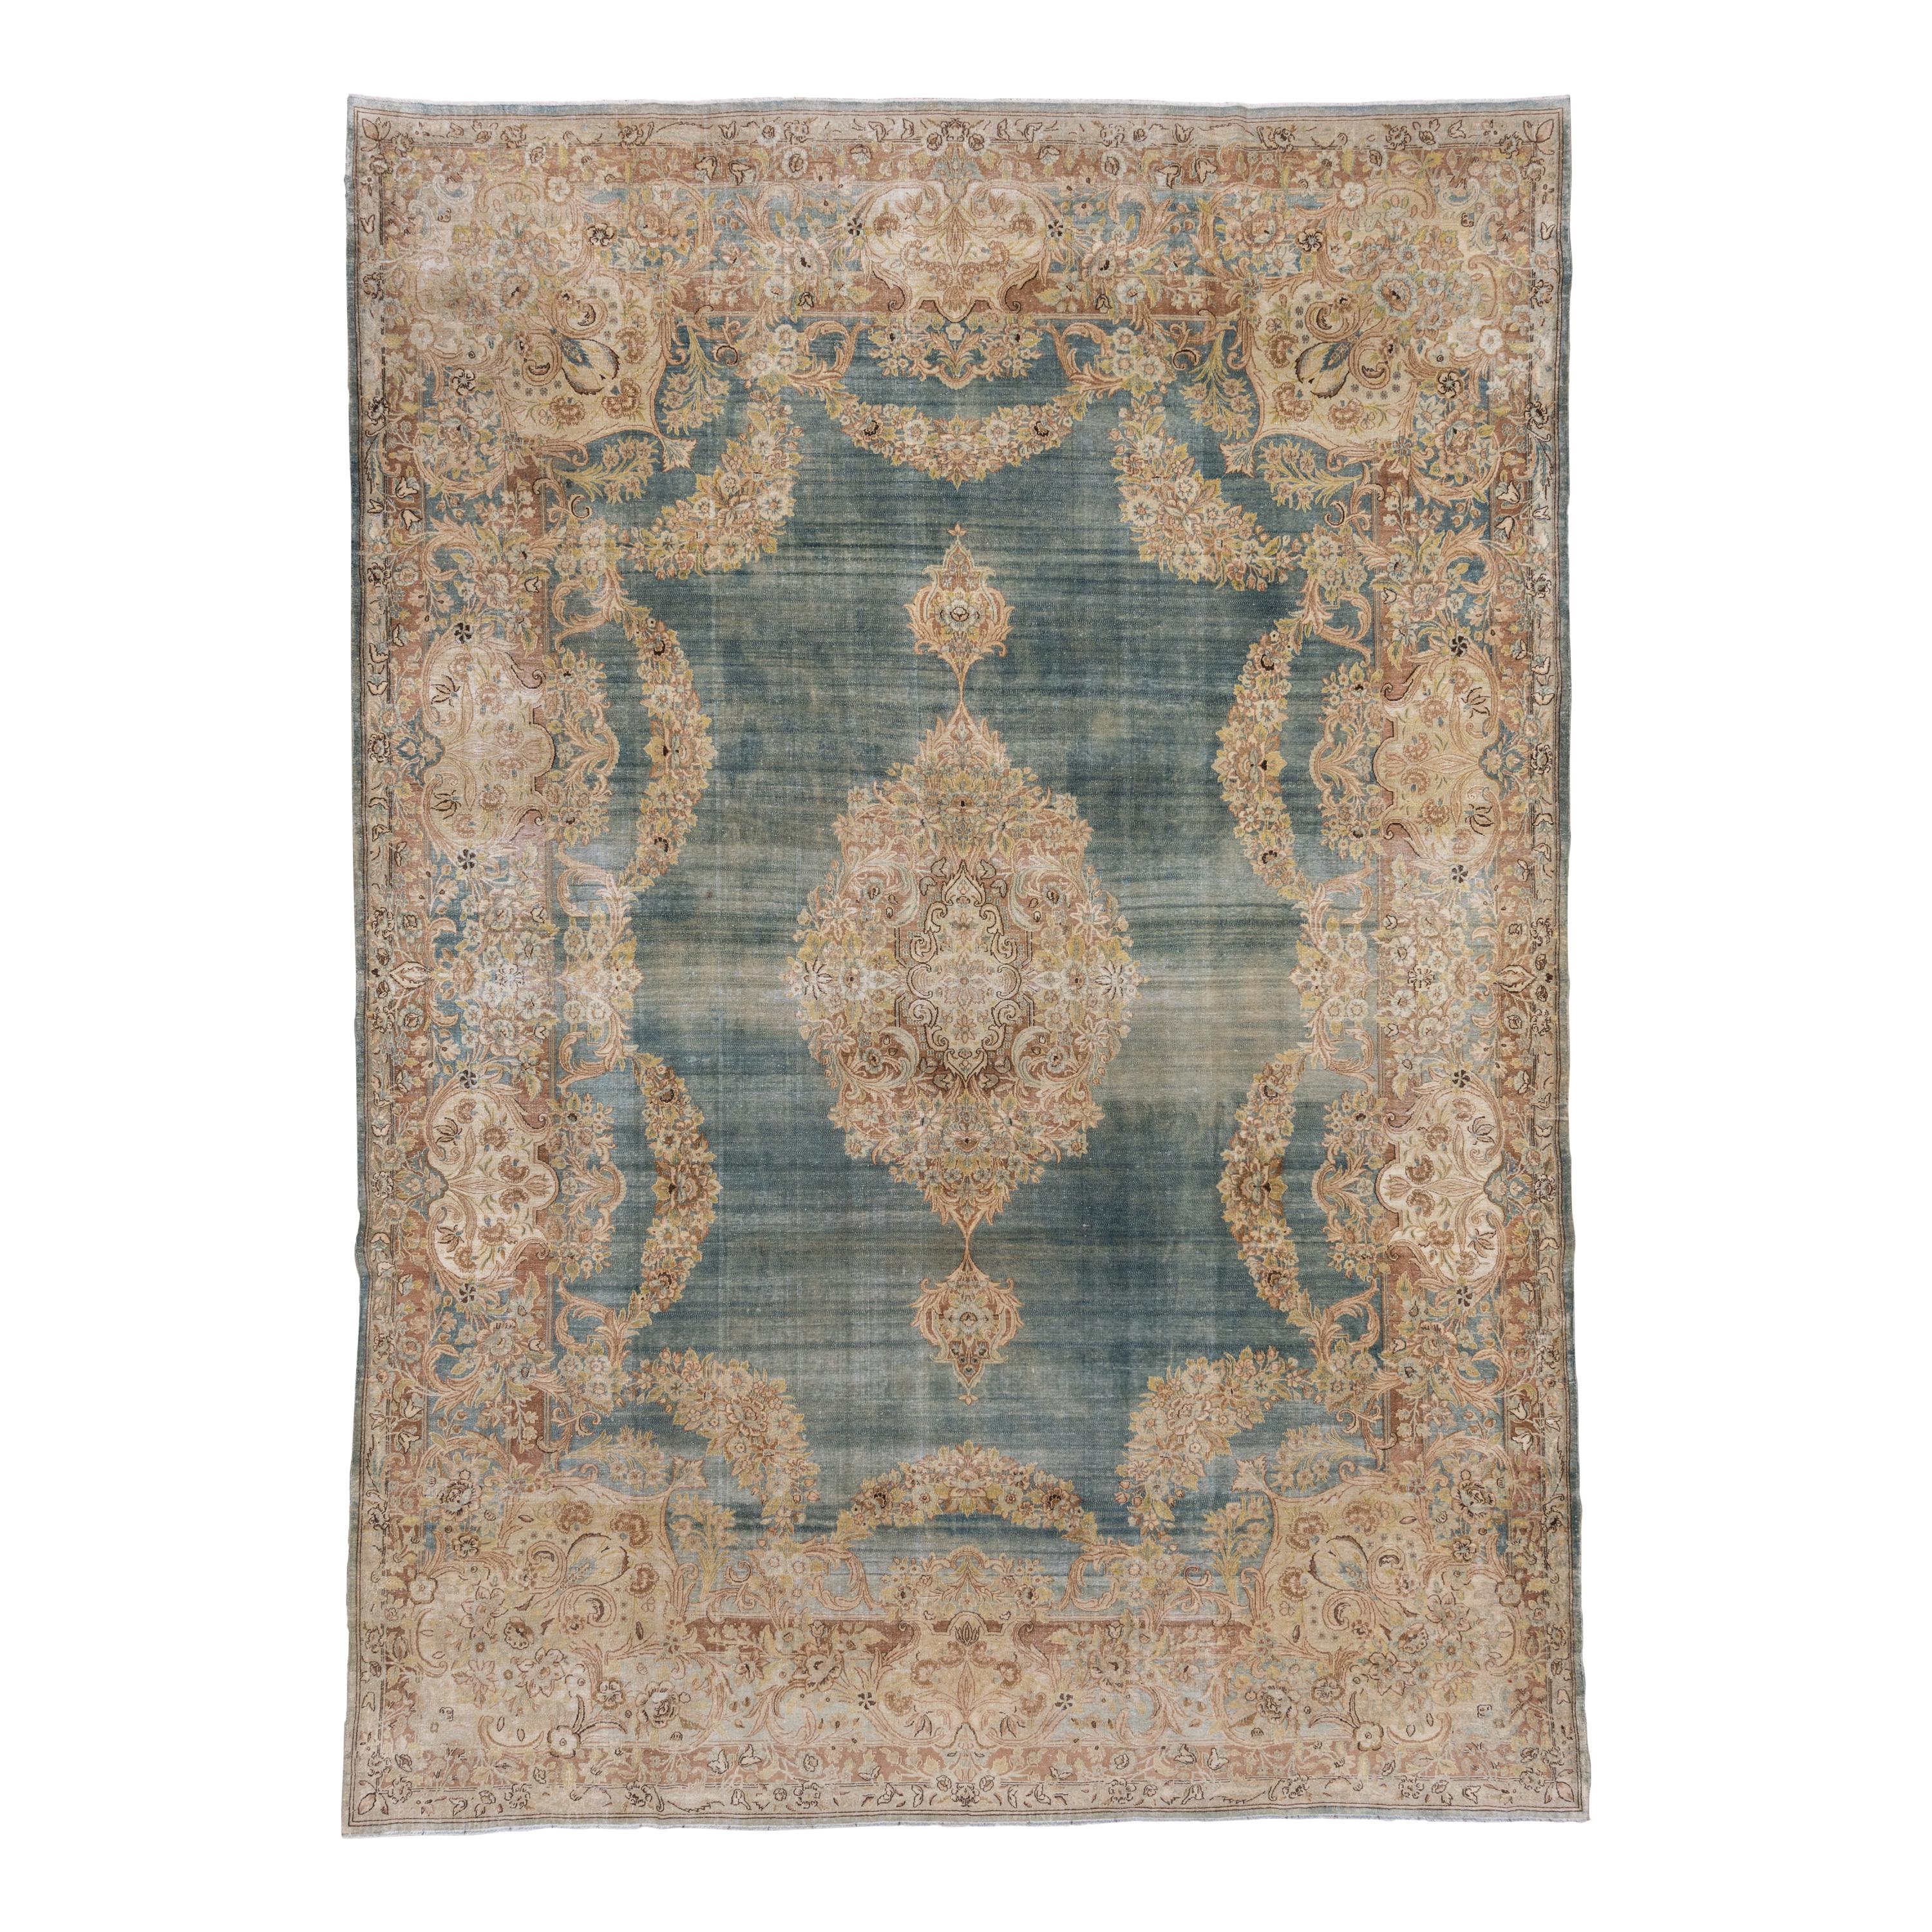 Antique Turkish Sivas Carpet, Blue Green Field, Formal Palette For Sale